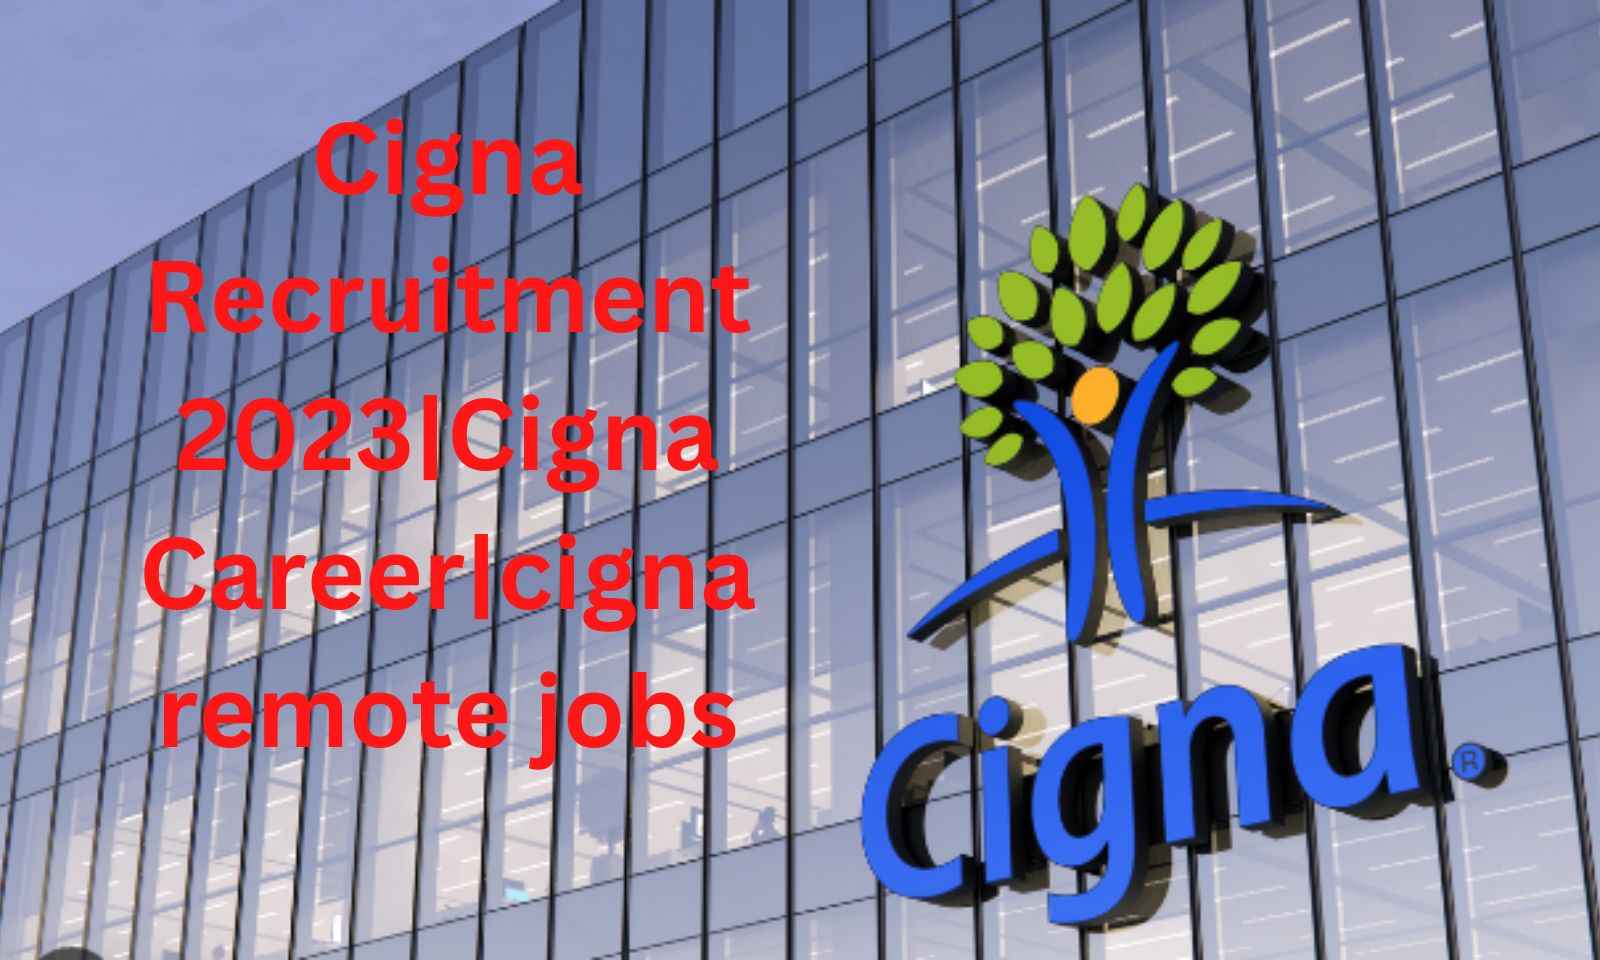 Cigna jobs in phoenix nuance entertainment console